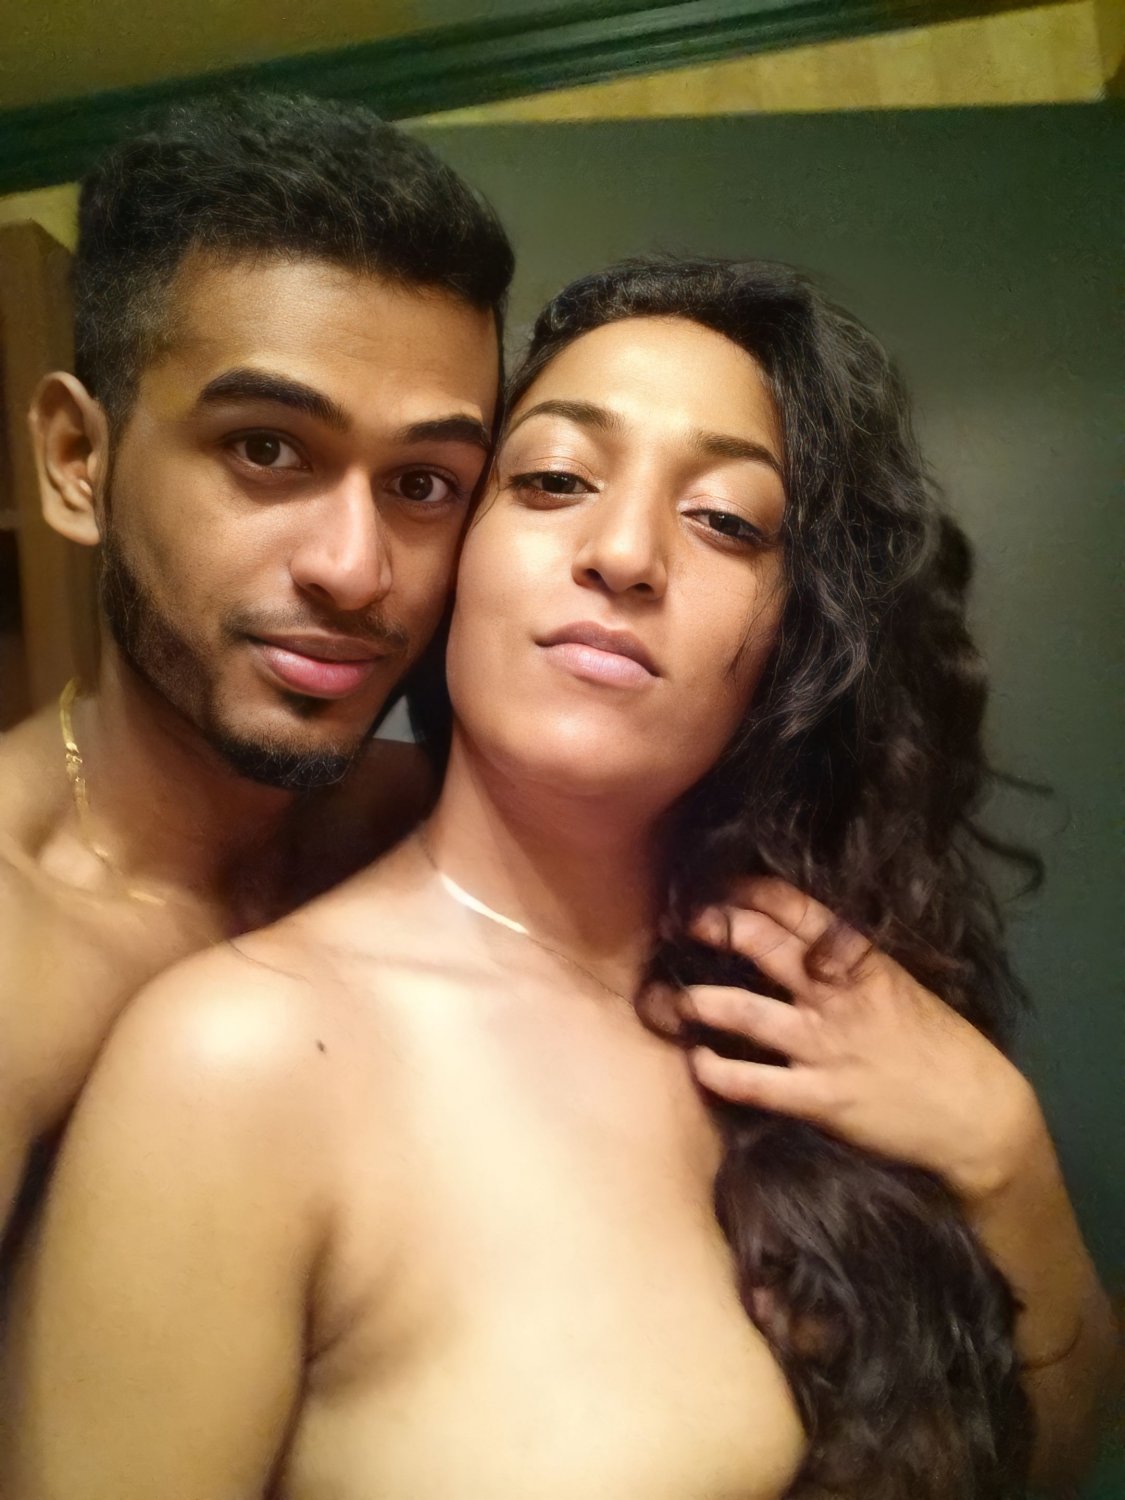 Hotauntymallusex - Indian Desi Couple Fucking | Sex Pictures Pass